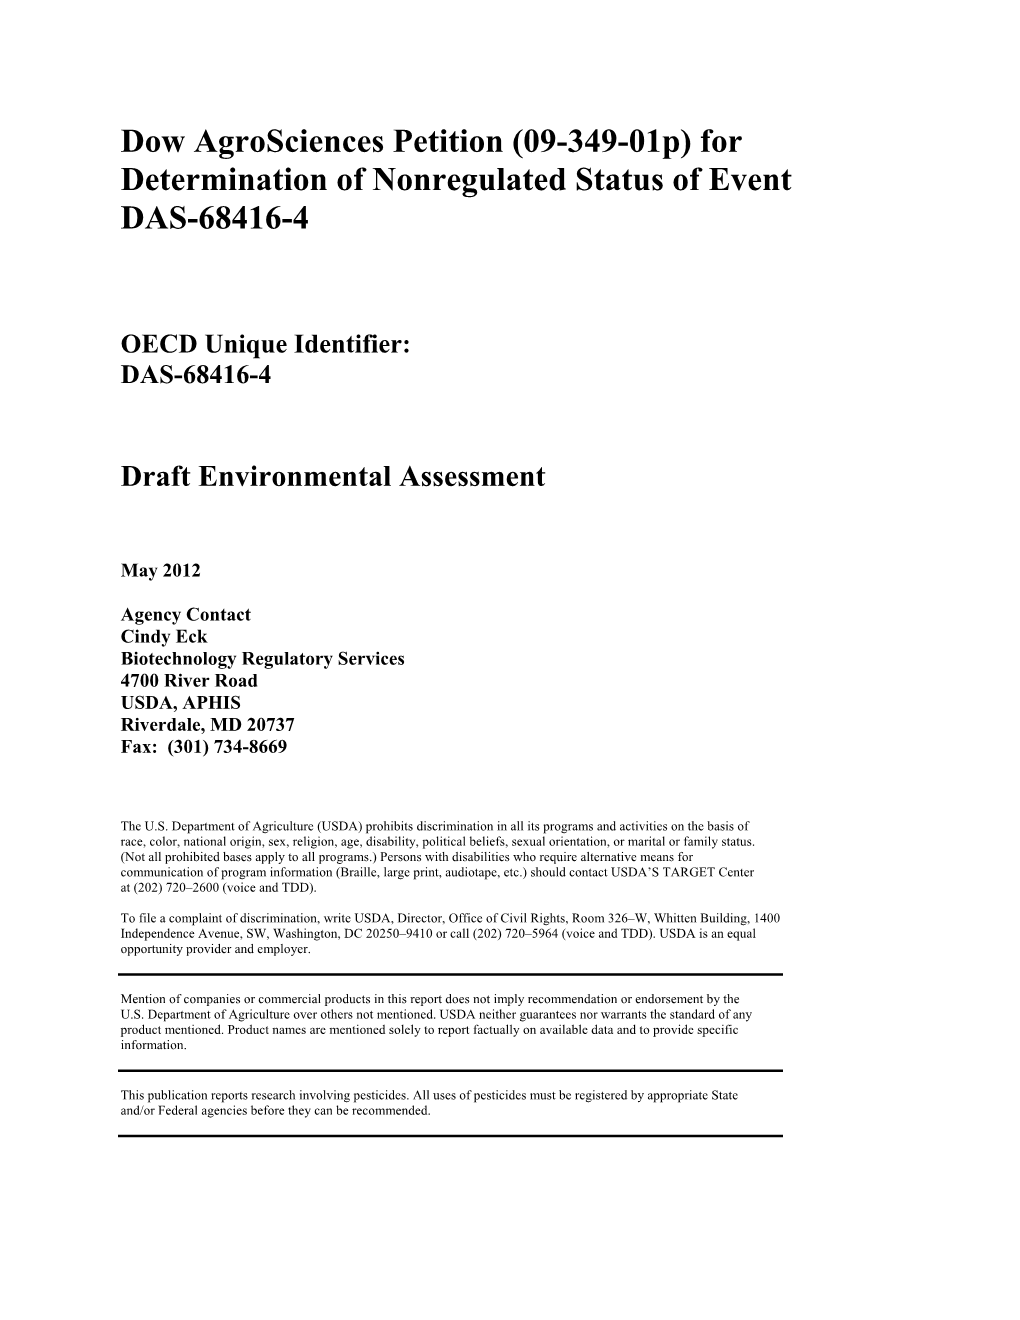 For Determination of Nonregulated Status of Event DAS-68416-4